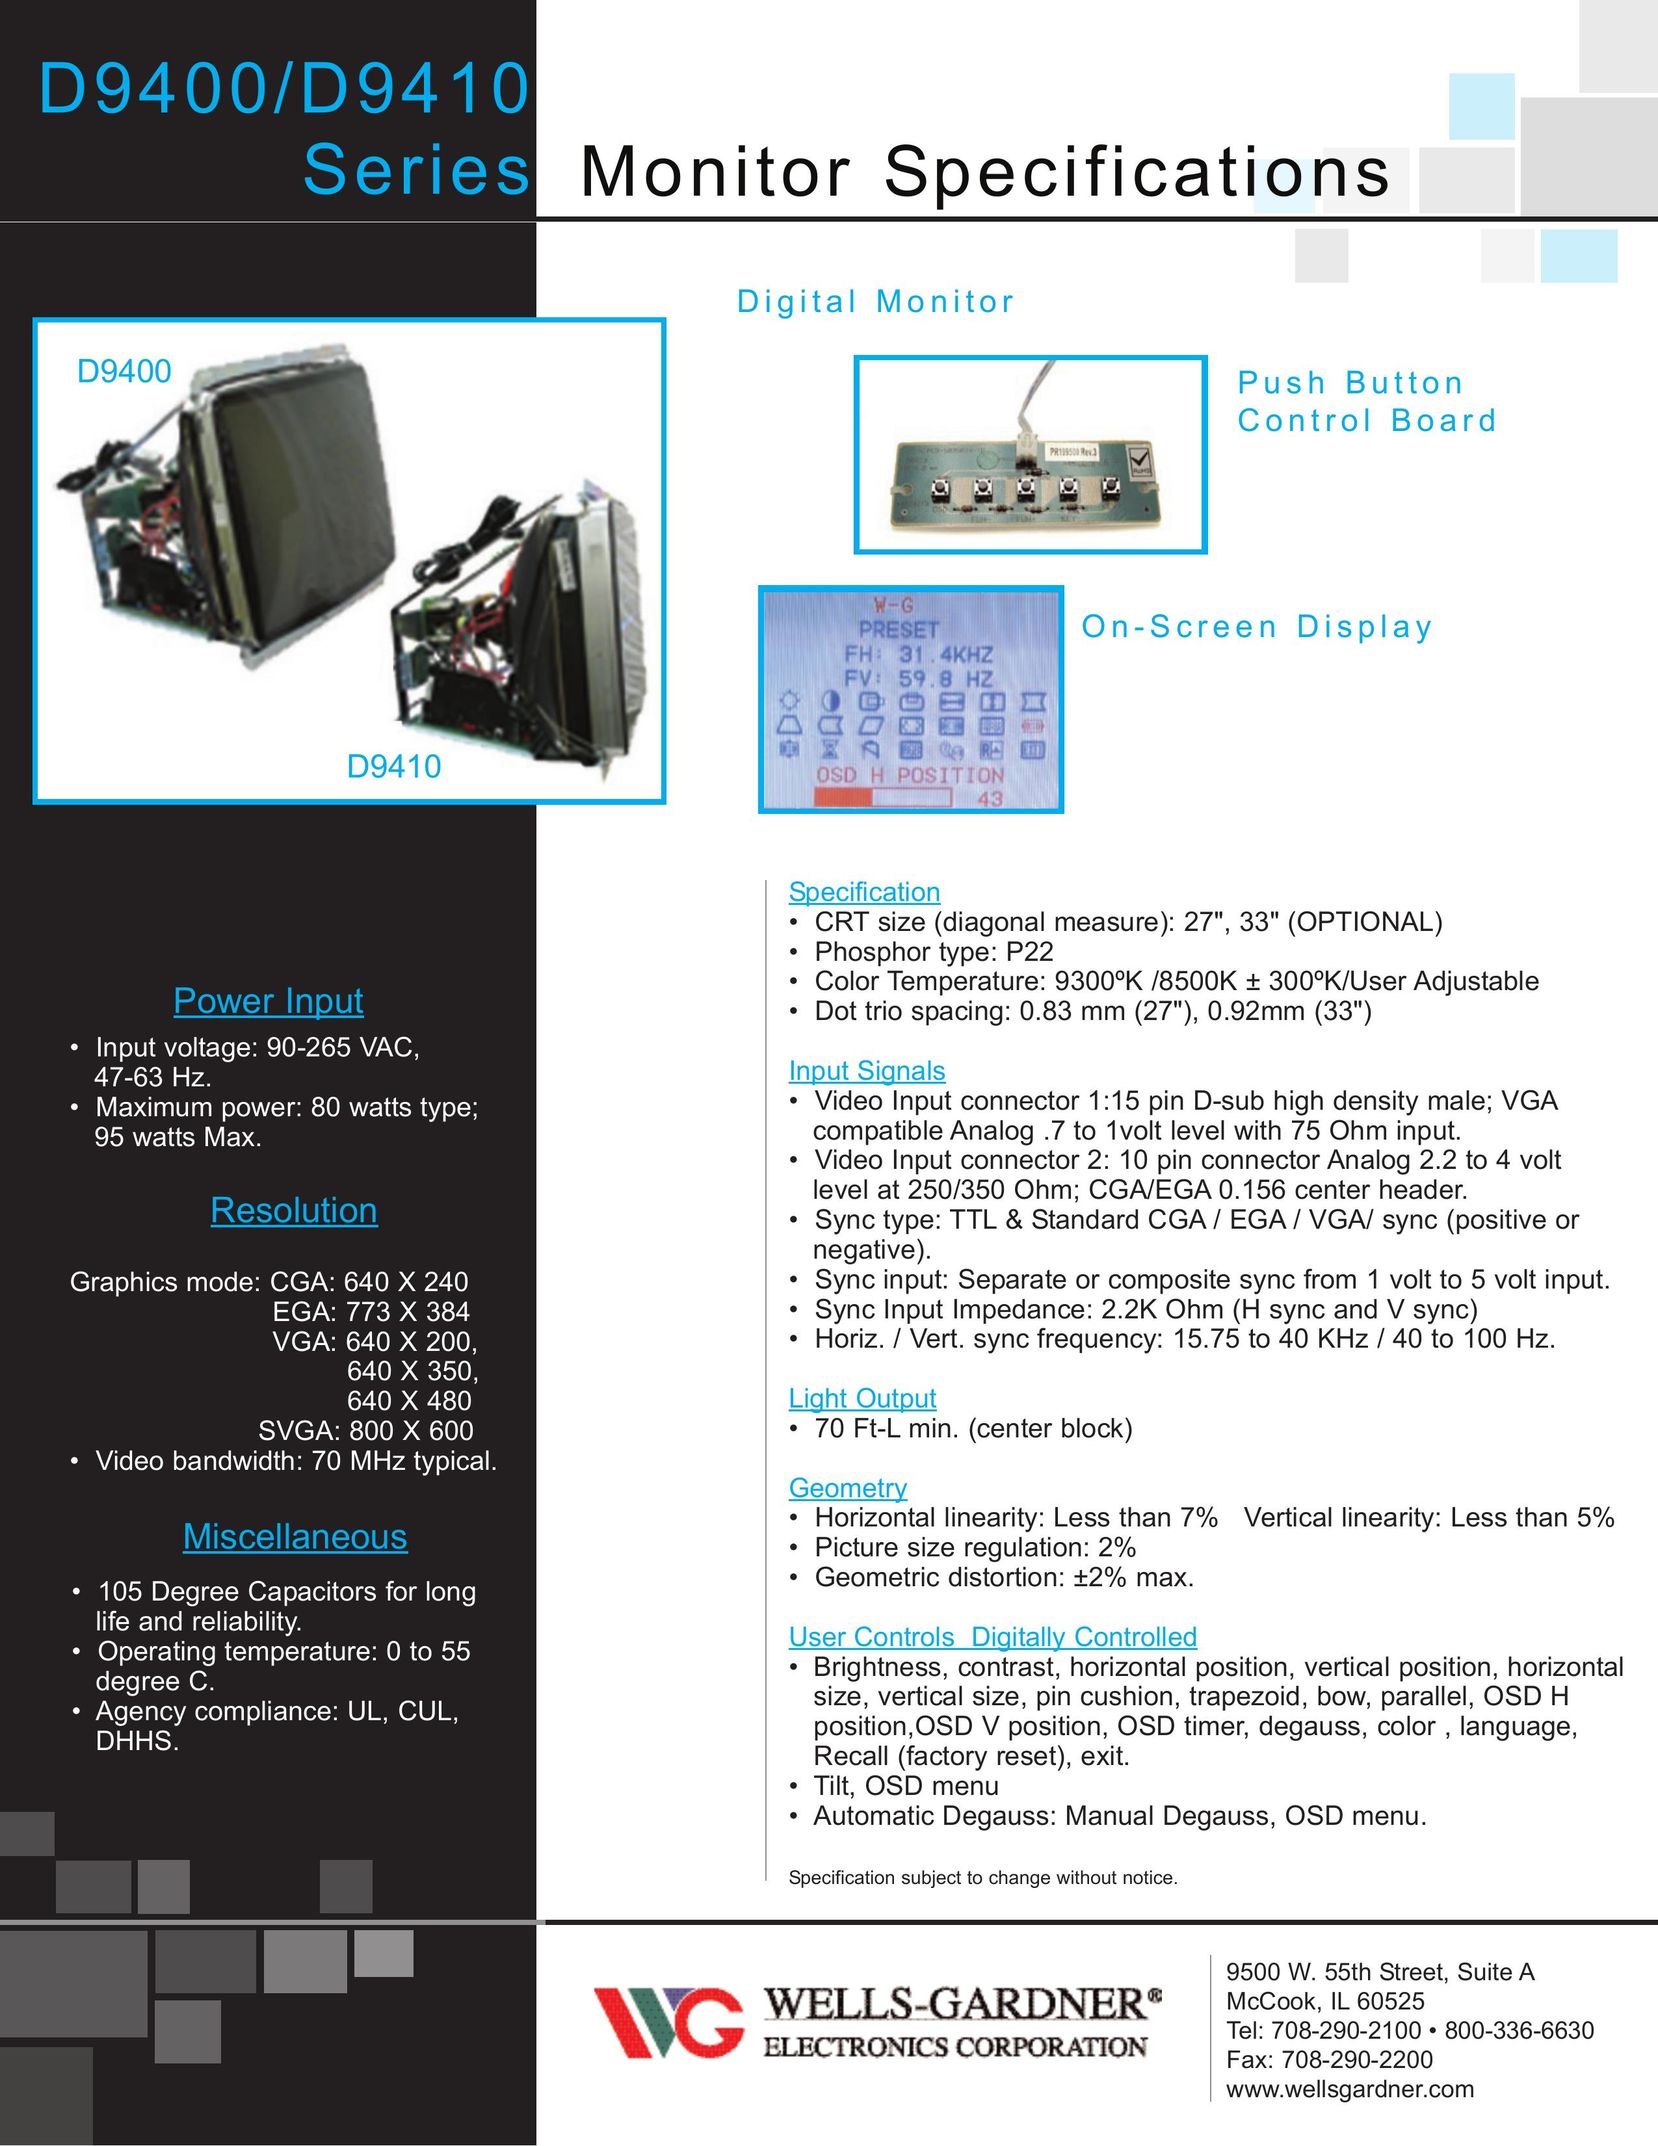 Wells-Gardner D9410 Computer Monitor User Manual